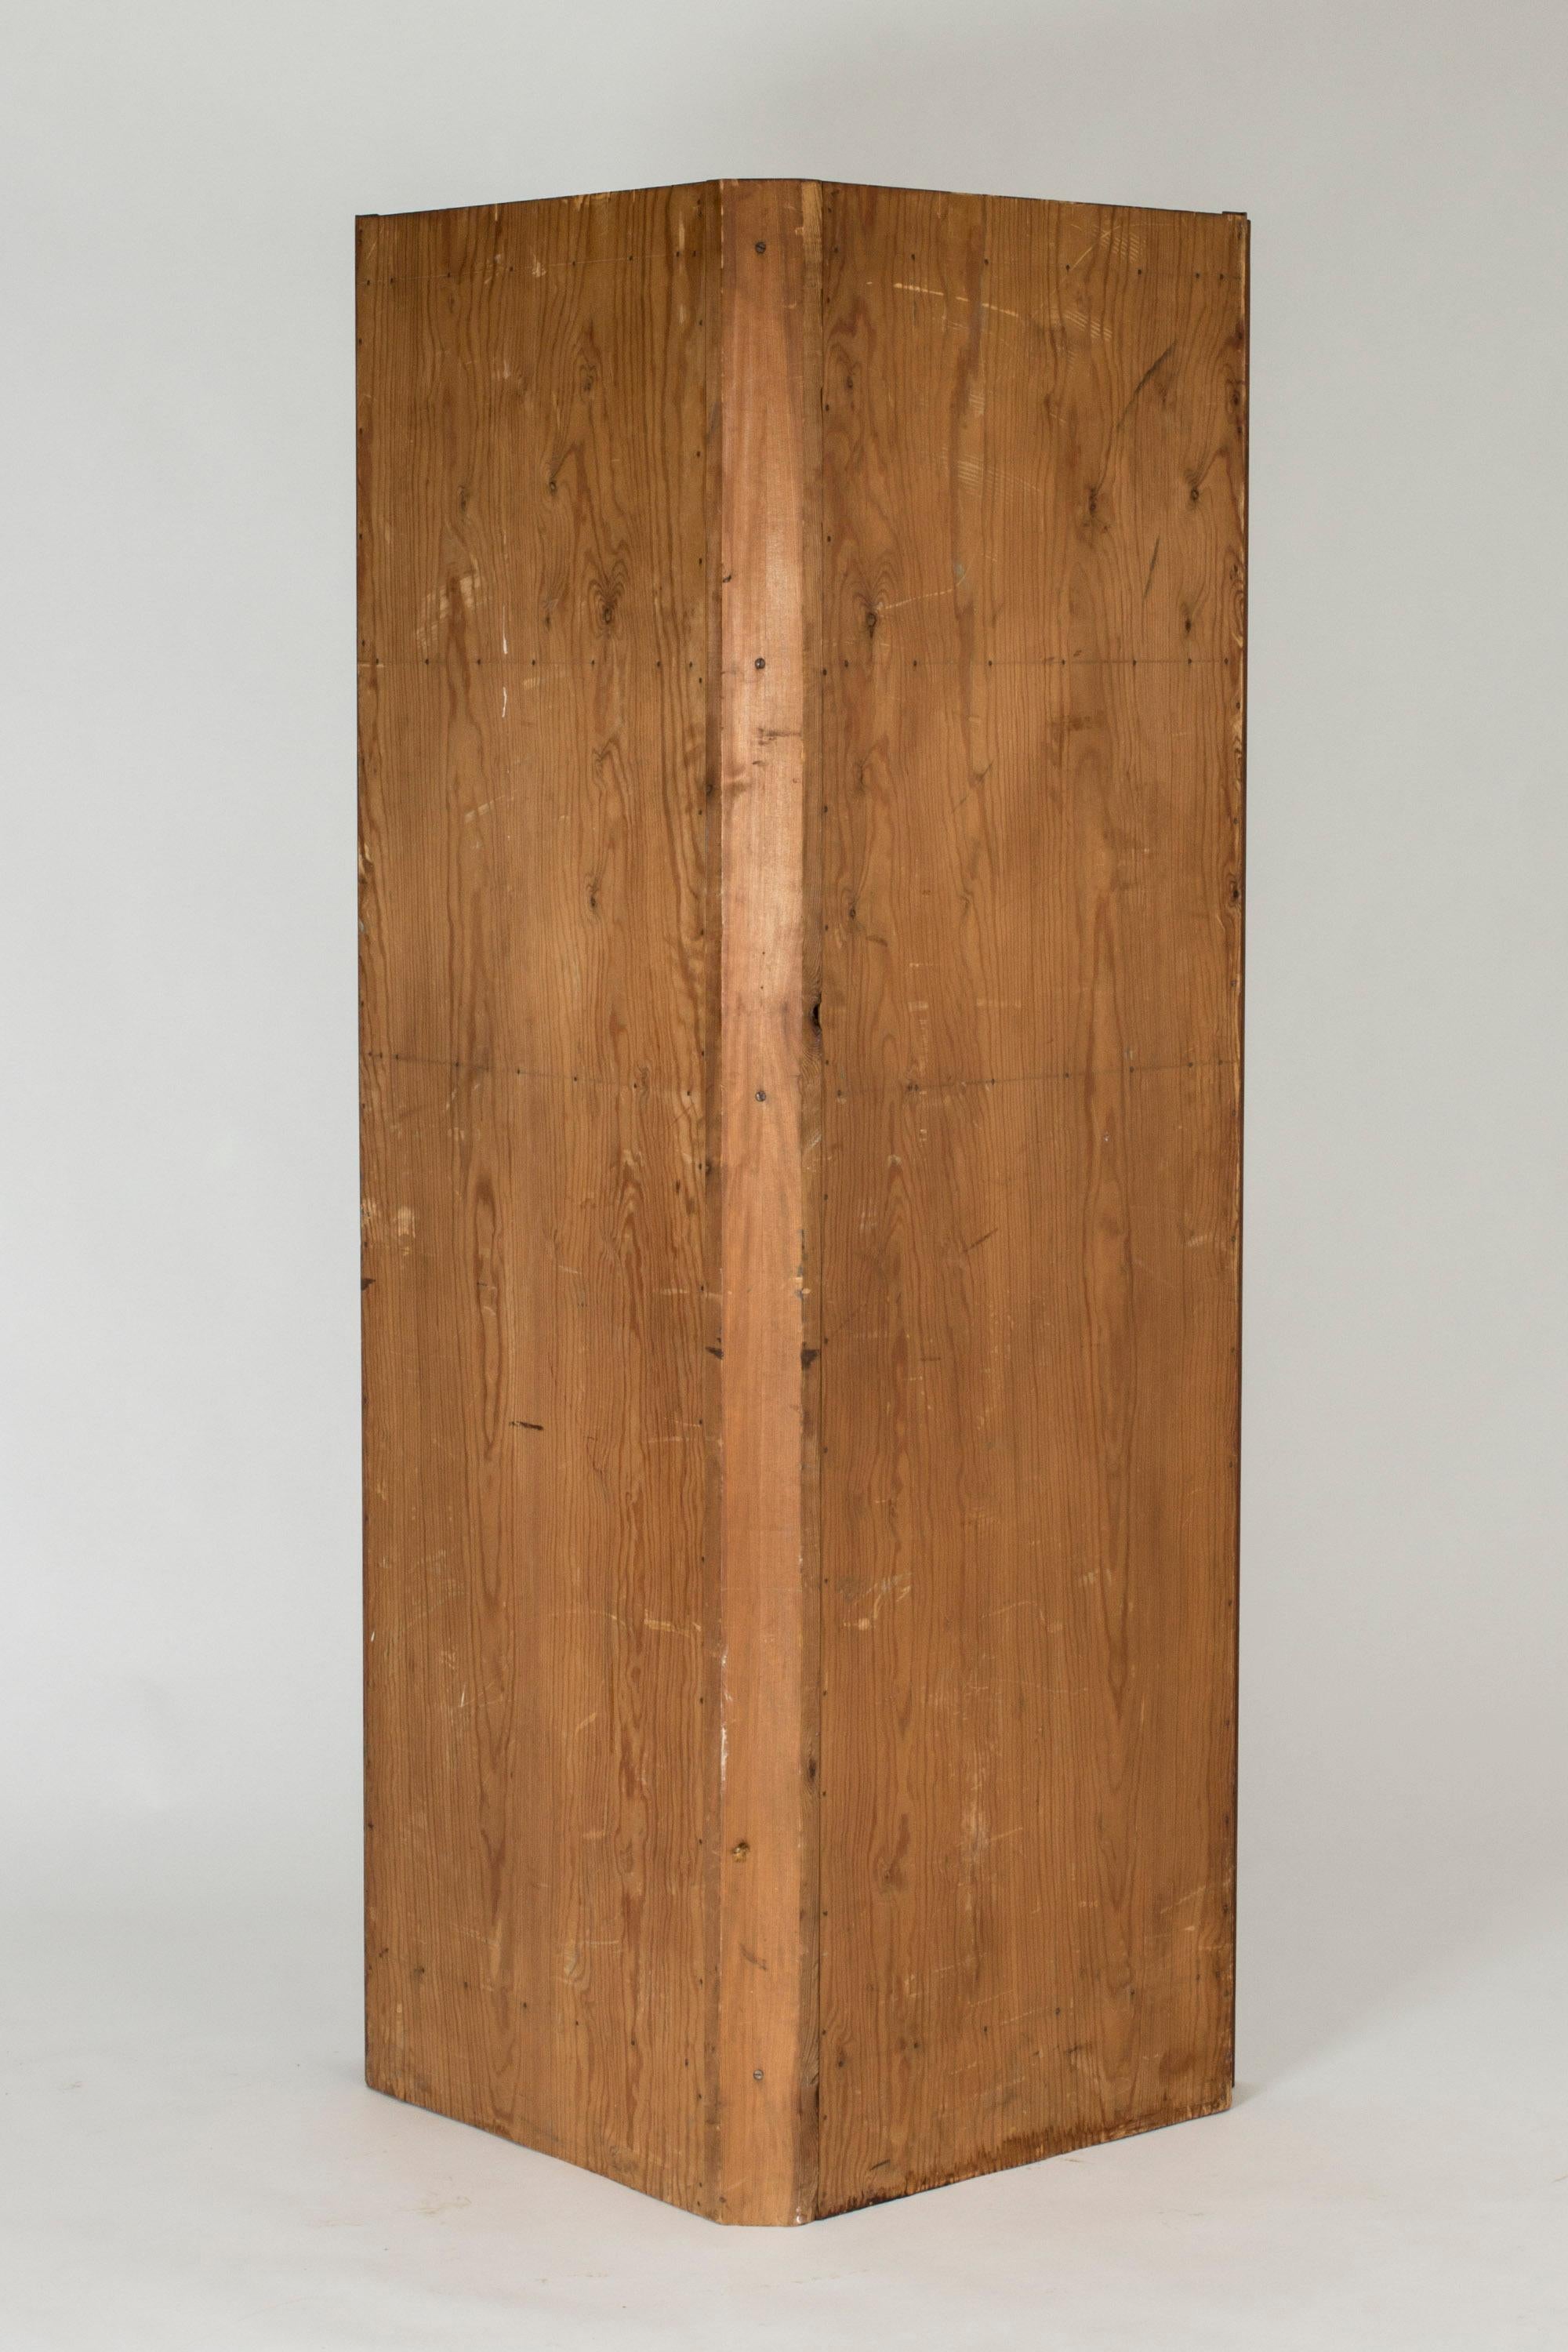 Pine Corner Cabinet, “Utö”, by Axel Einar Hjorth 1